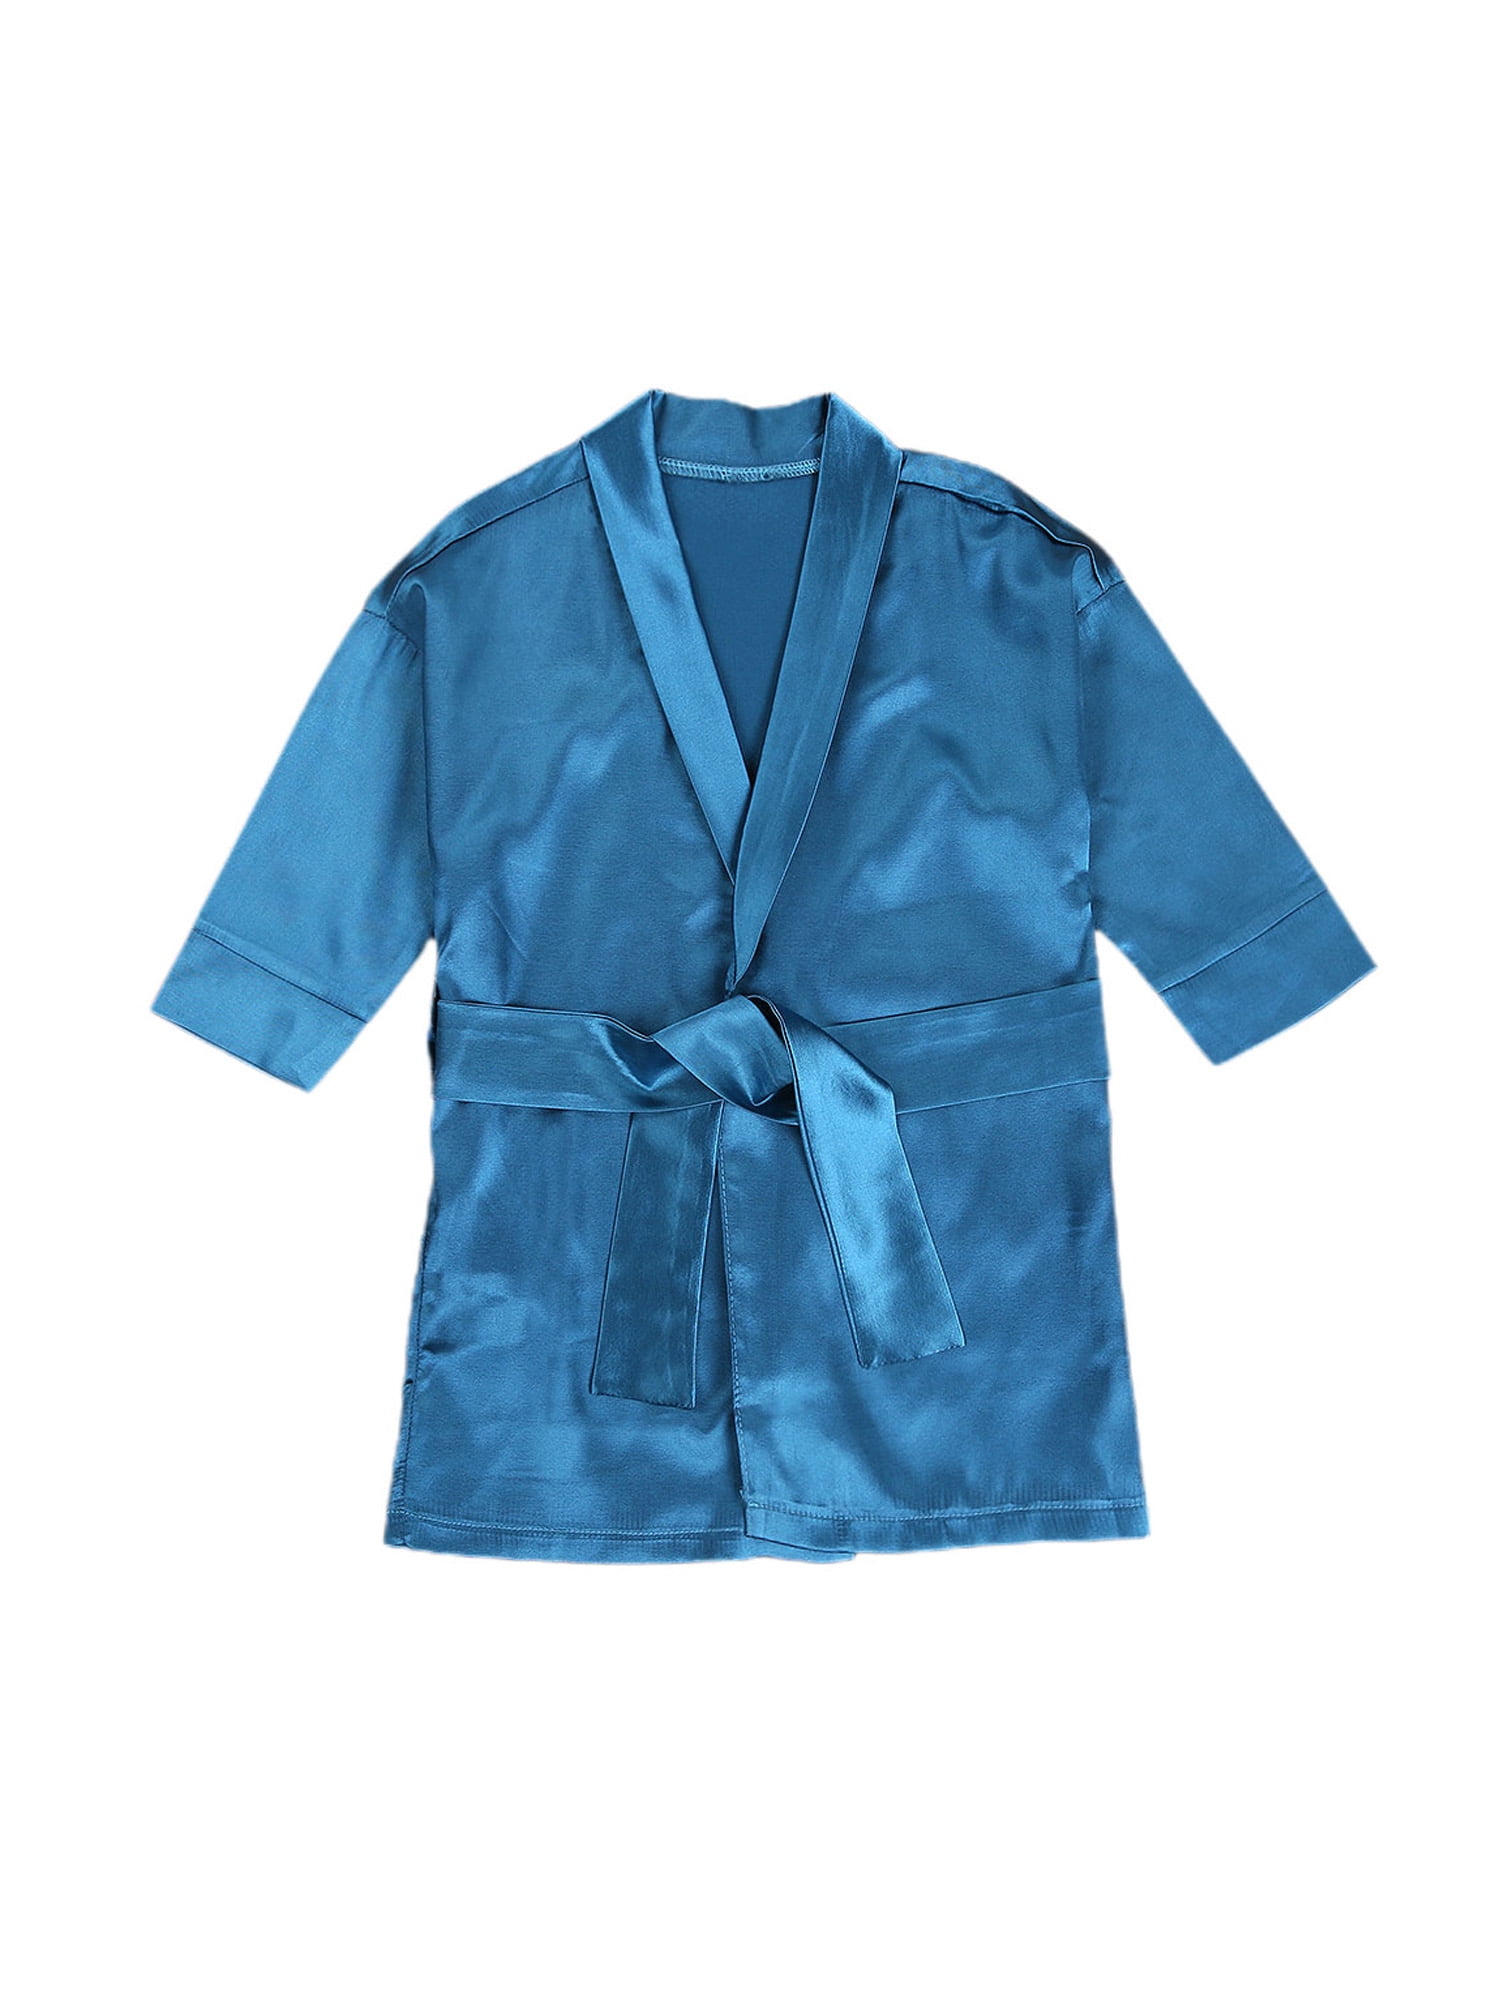 Kimono Clothes Satin Silk Bathrobe Toddler Baby Robes Sleepwear Kids G –  BABACLICK